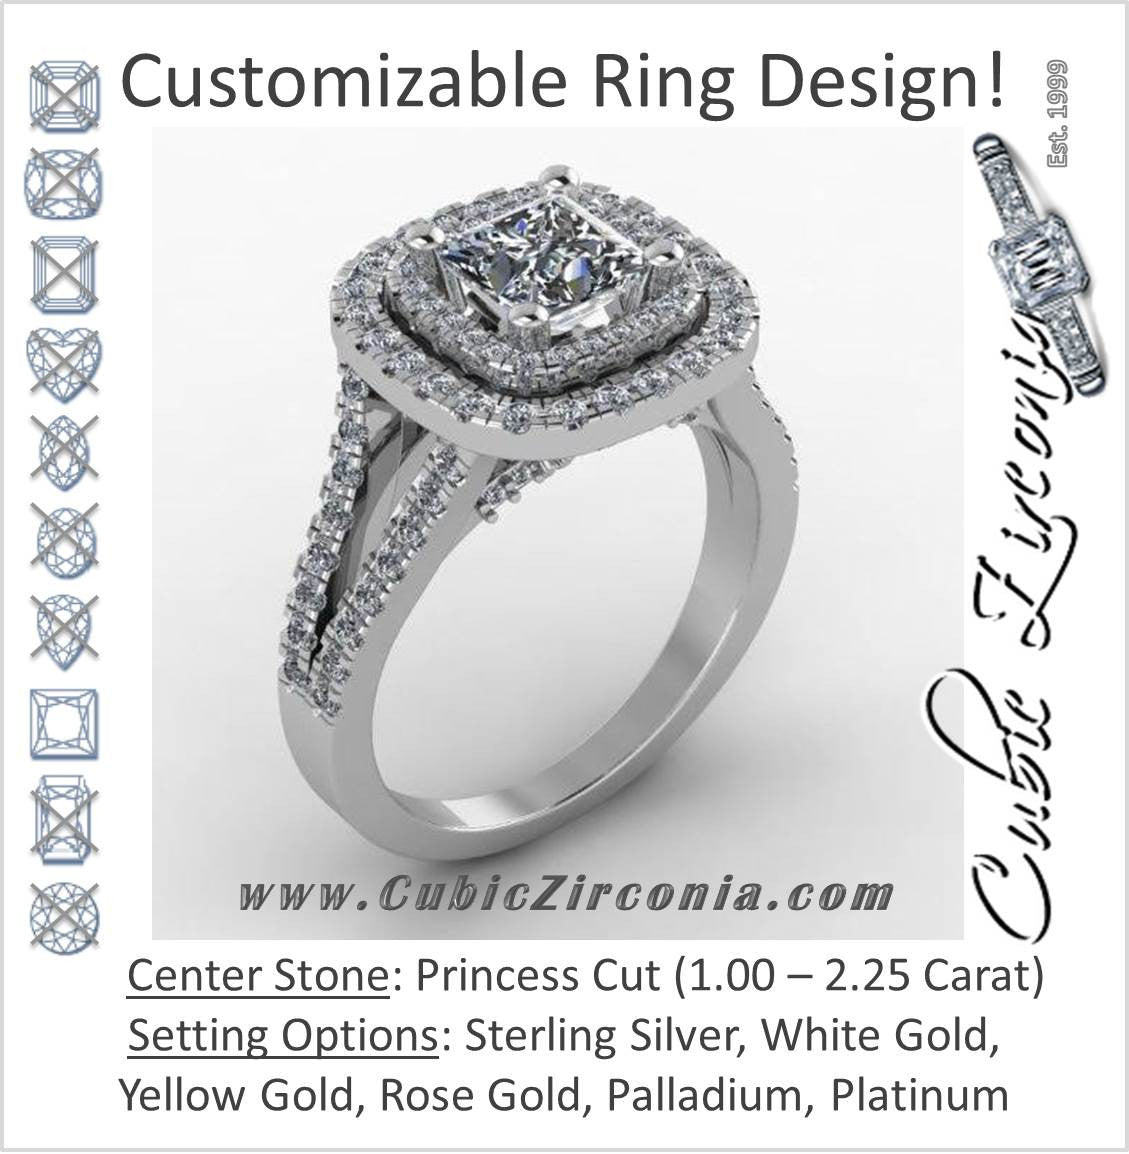 2.90 Carat Black Diamond Engagement Promise Ring, Natural White Diamonds  Halo, 14k Rose Gold, Big Black Diamond Alternative Engagement Ring -   Israel